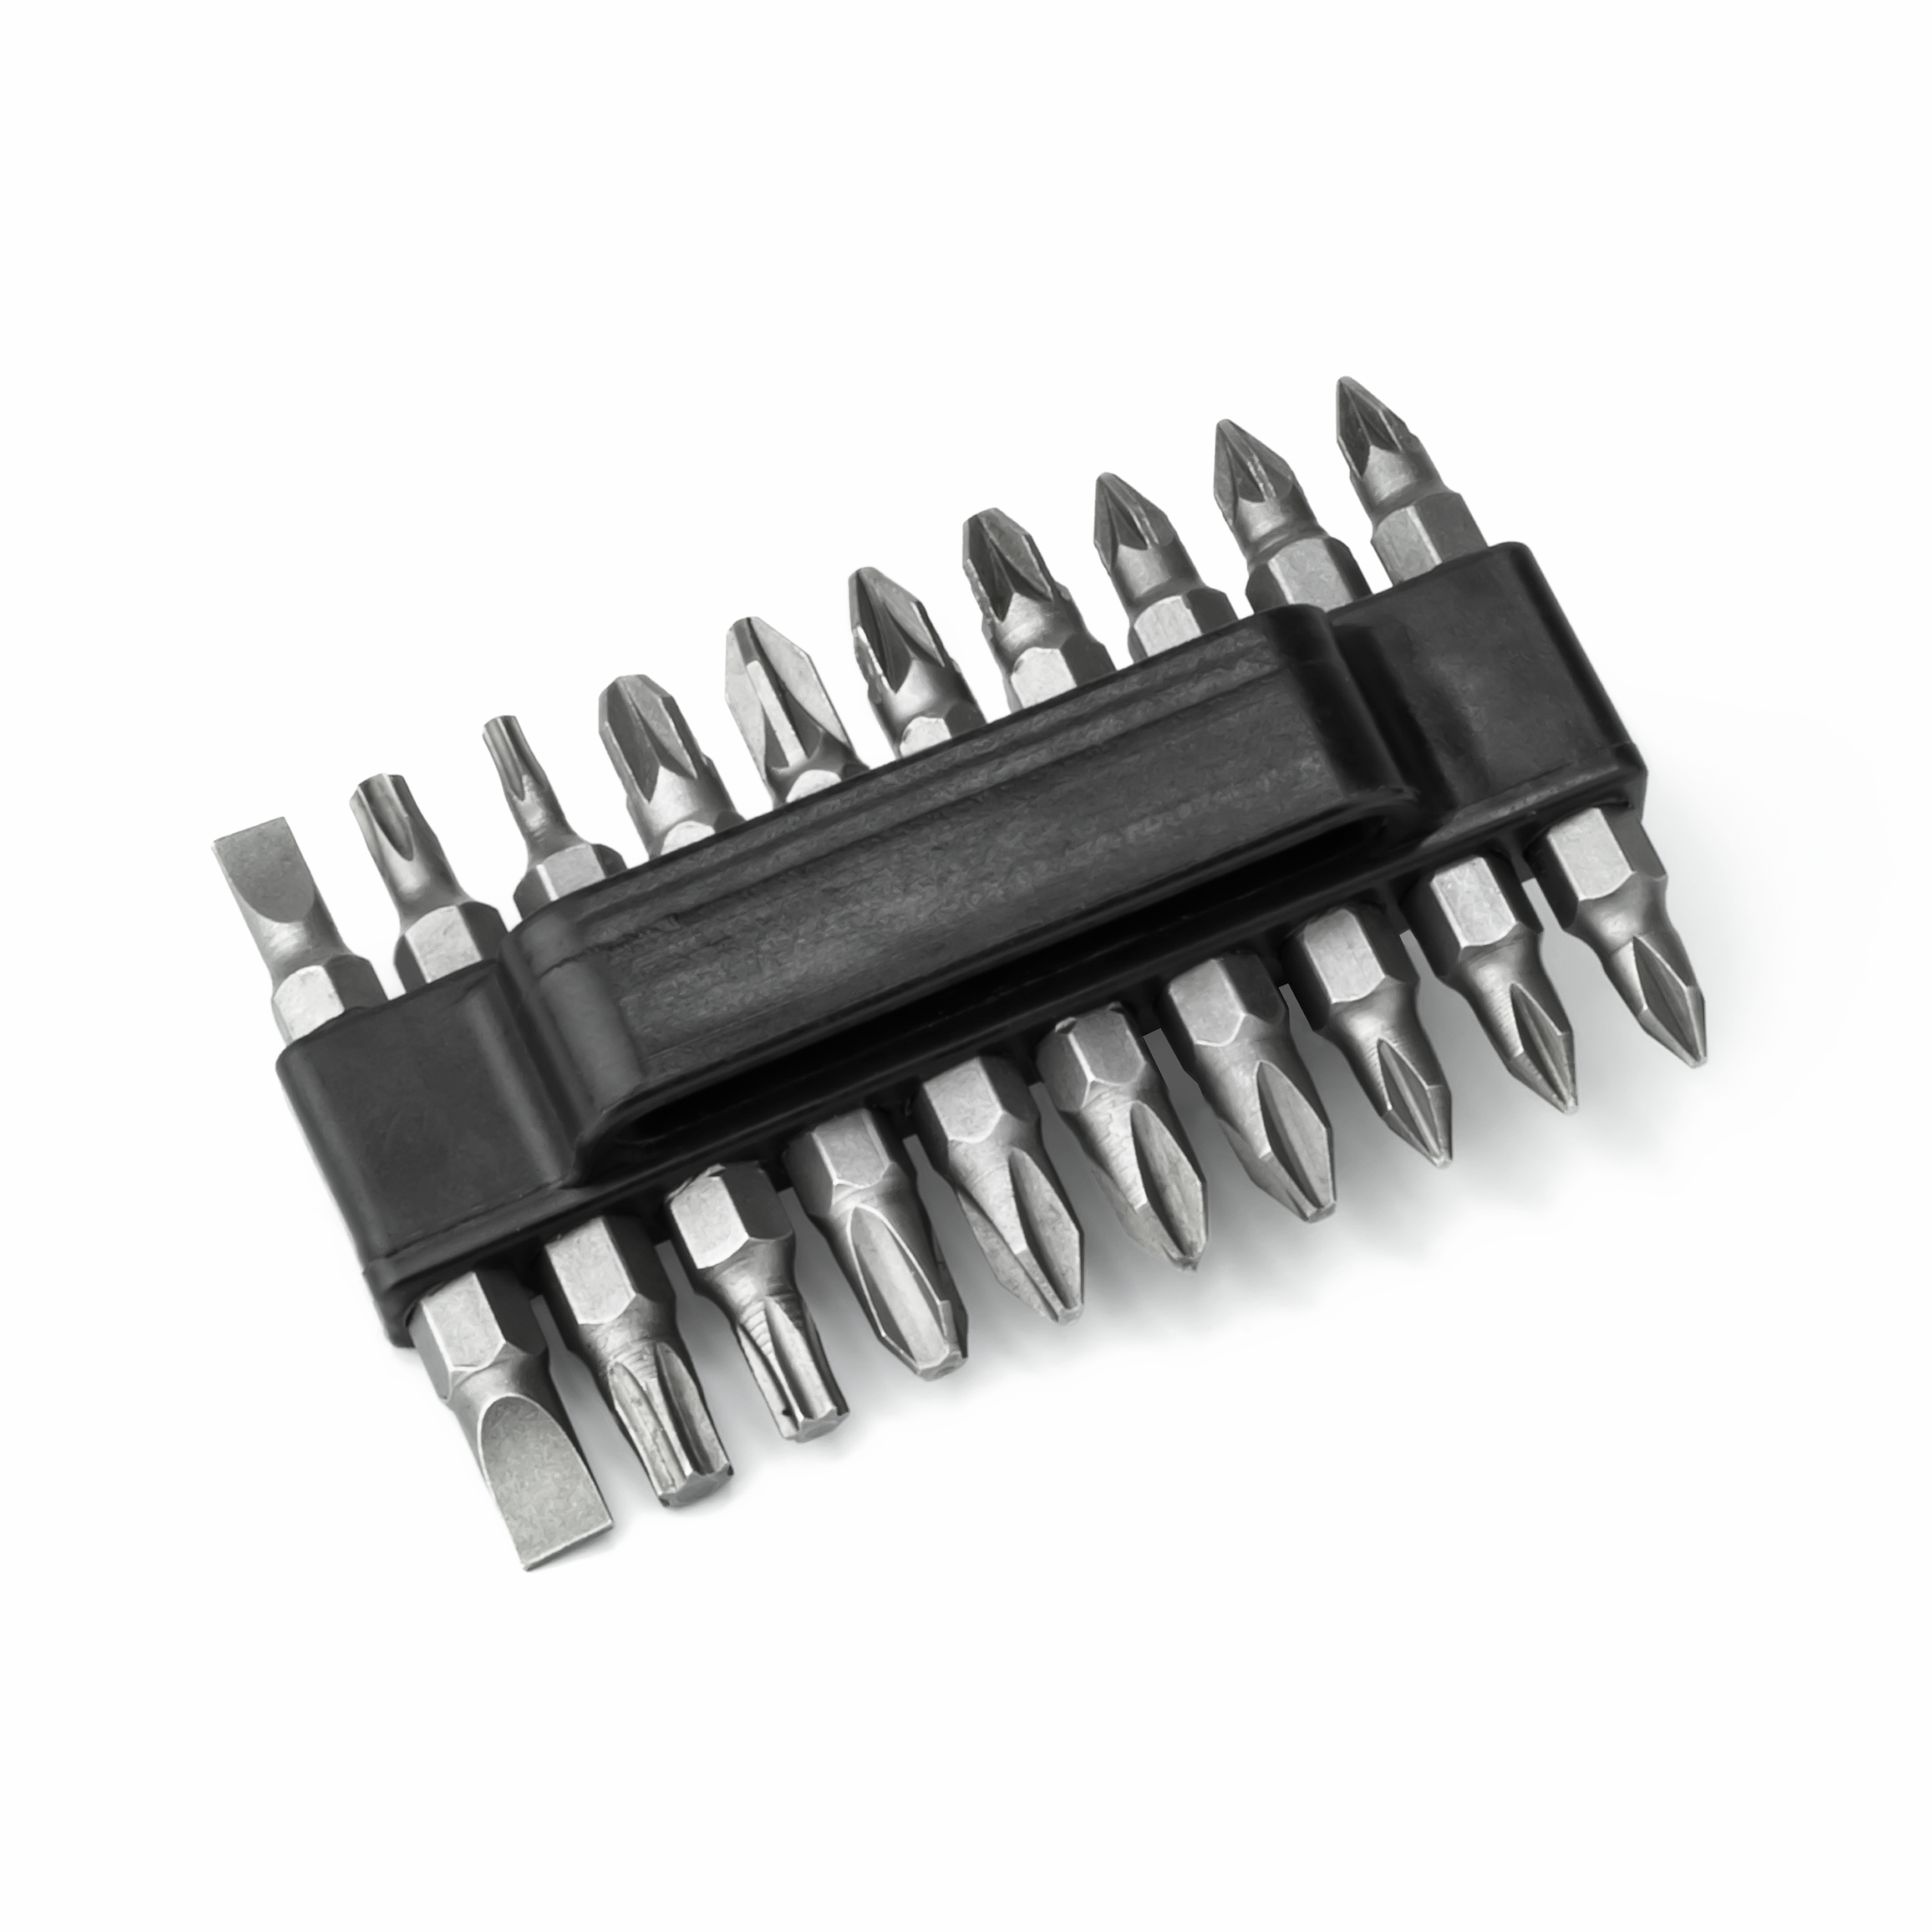 21 pcs screwdriver bit set for screws with cross recess, Torx product pictures